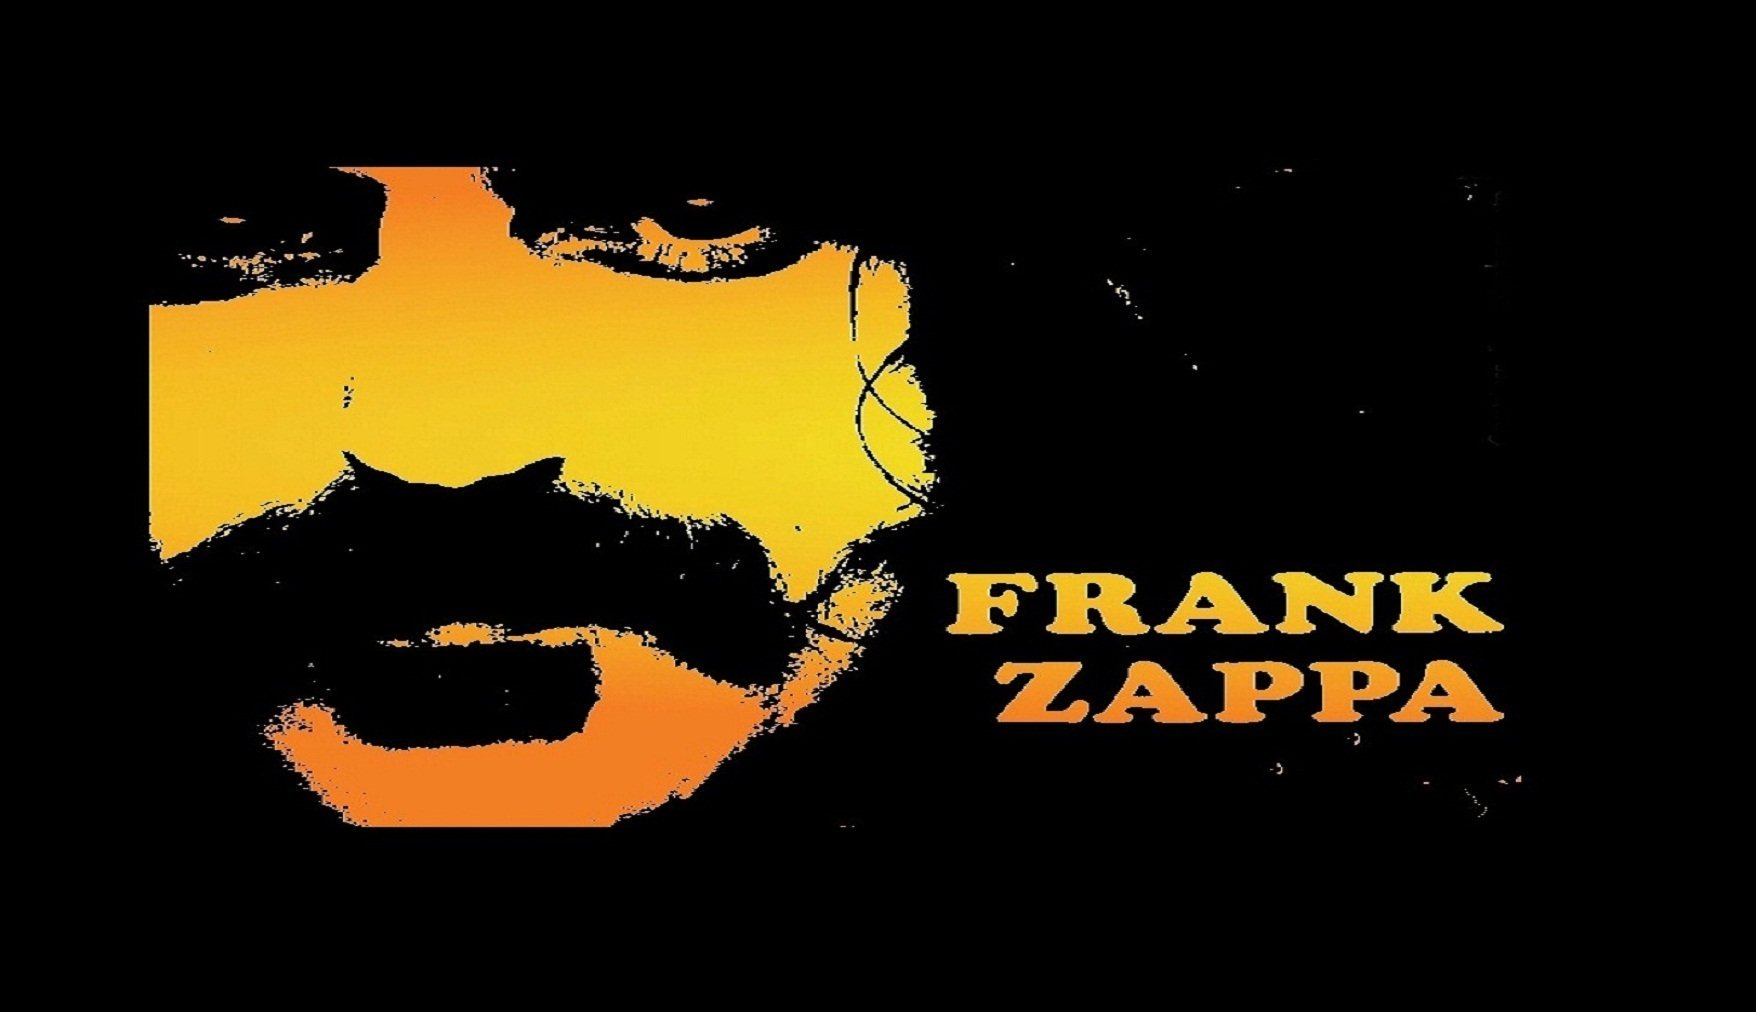 Frank zappa wallpaper 1756x1012 255885 WallpaperUP